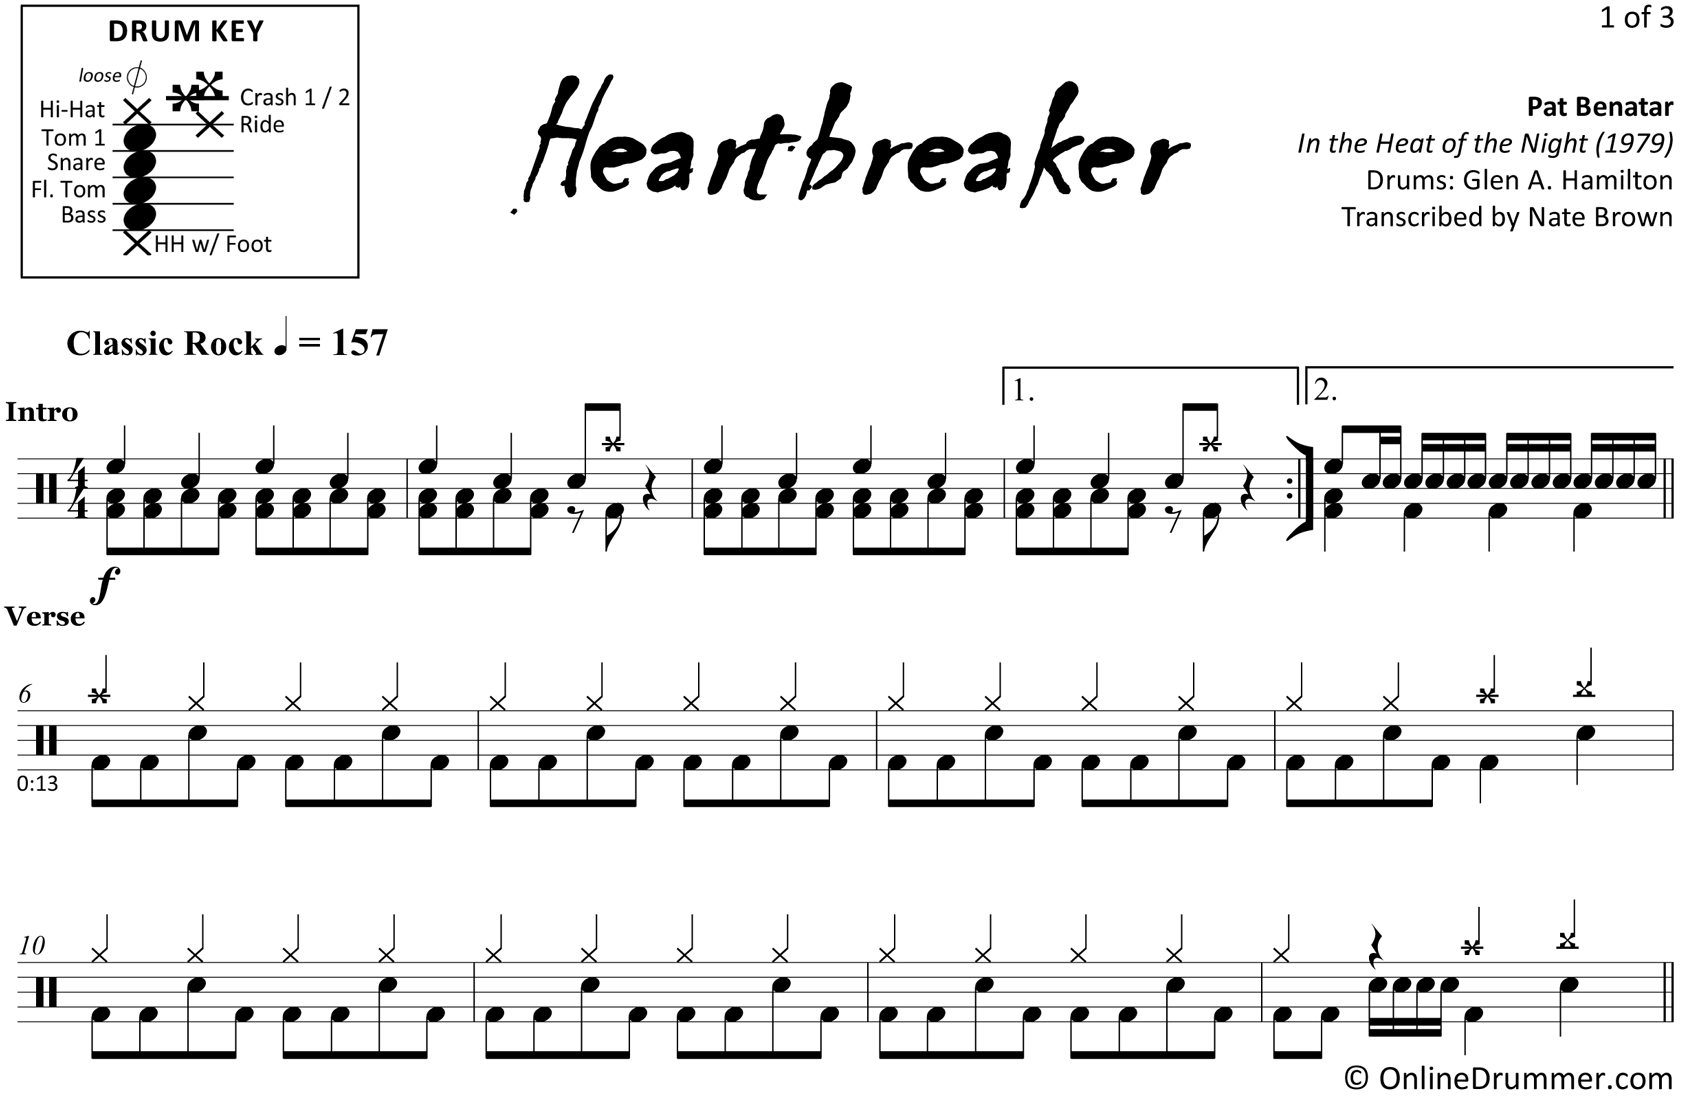 Heartbreaker - Pat Benatar - Drum Sheet Music